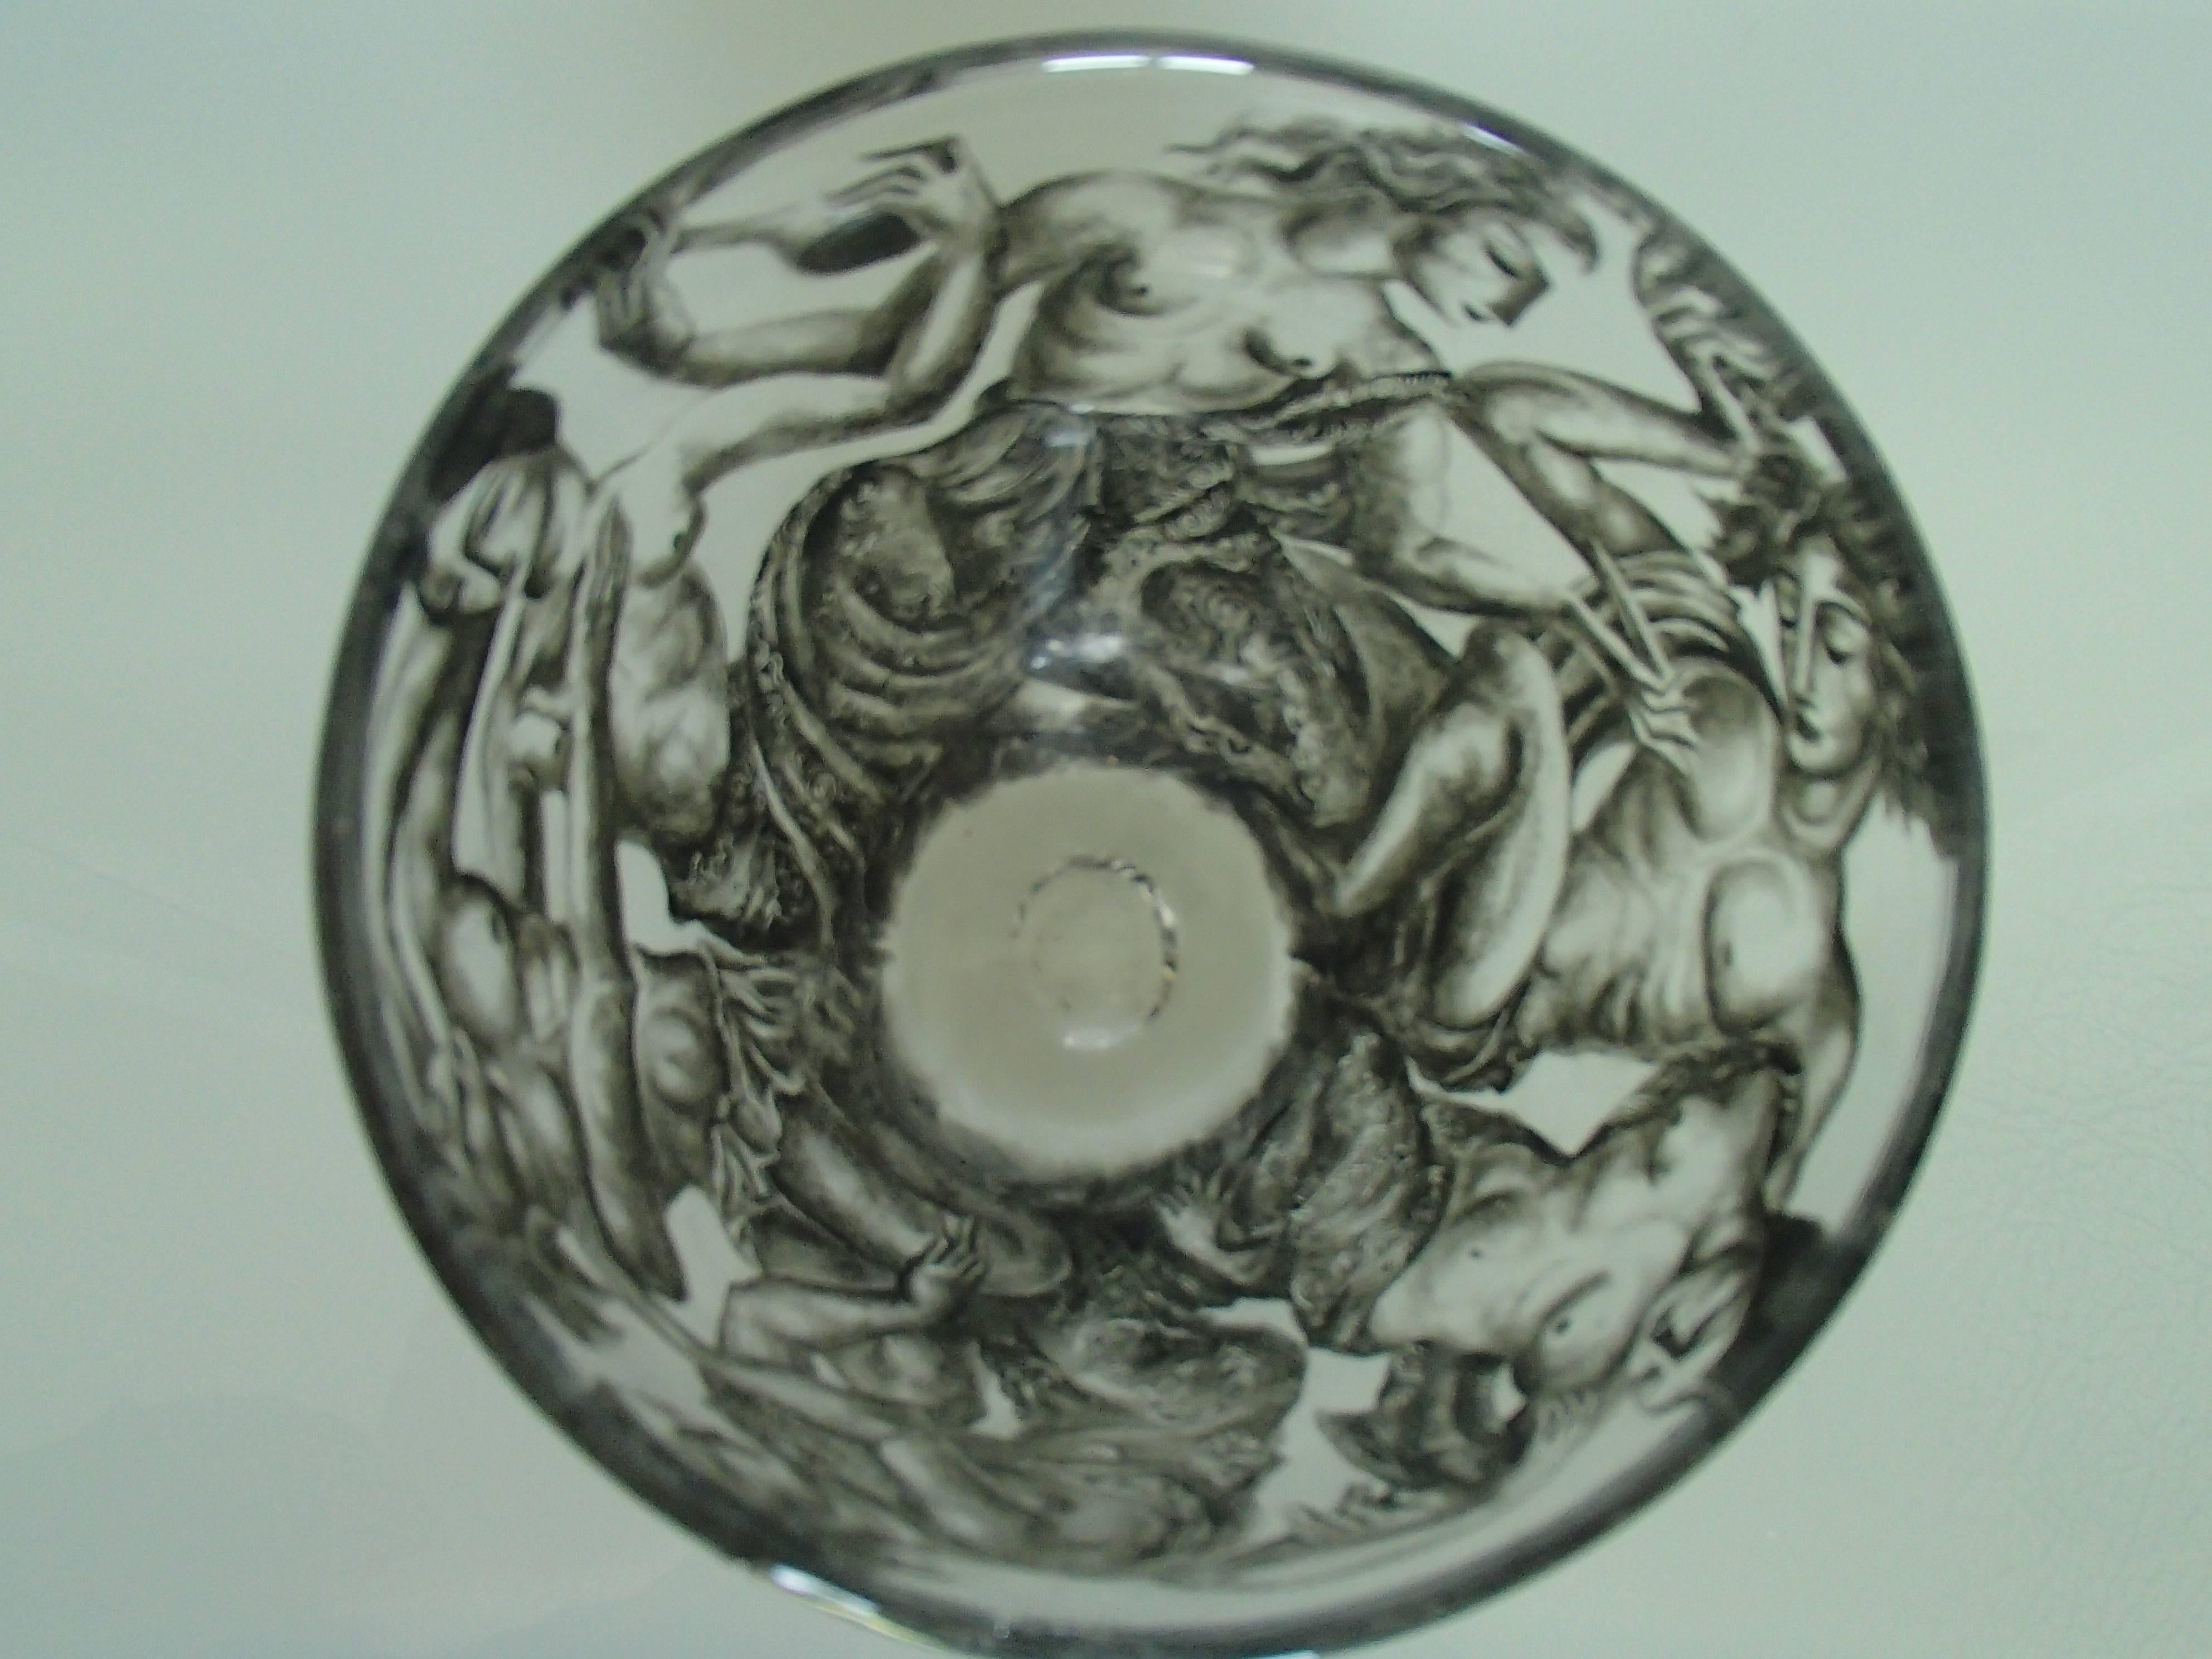 Art Glass Bauhaus bowl with black cubistic greac romain figures 